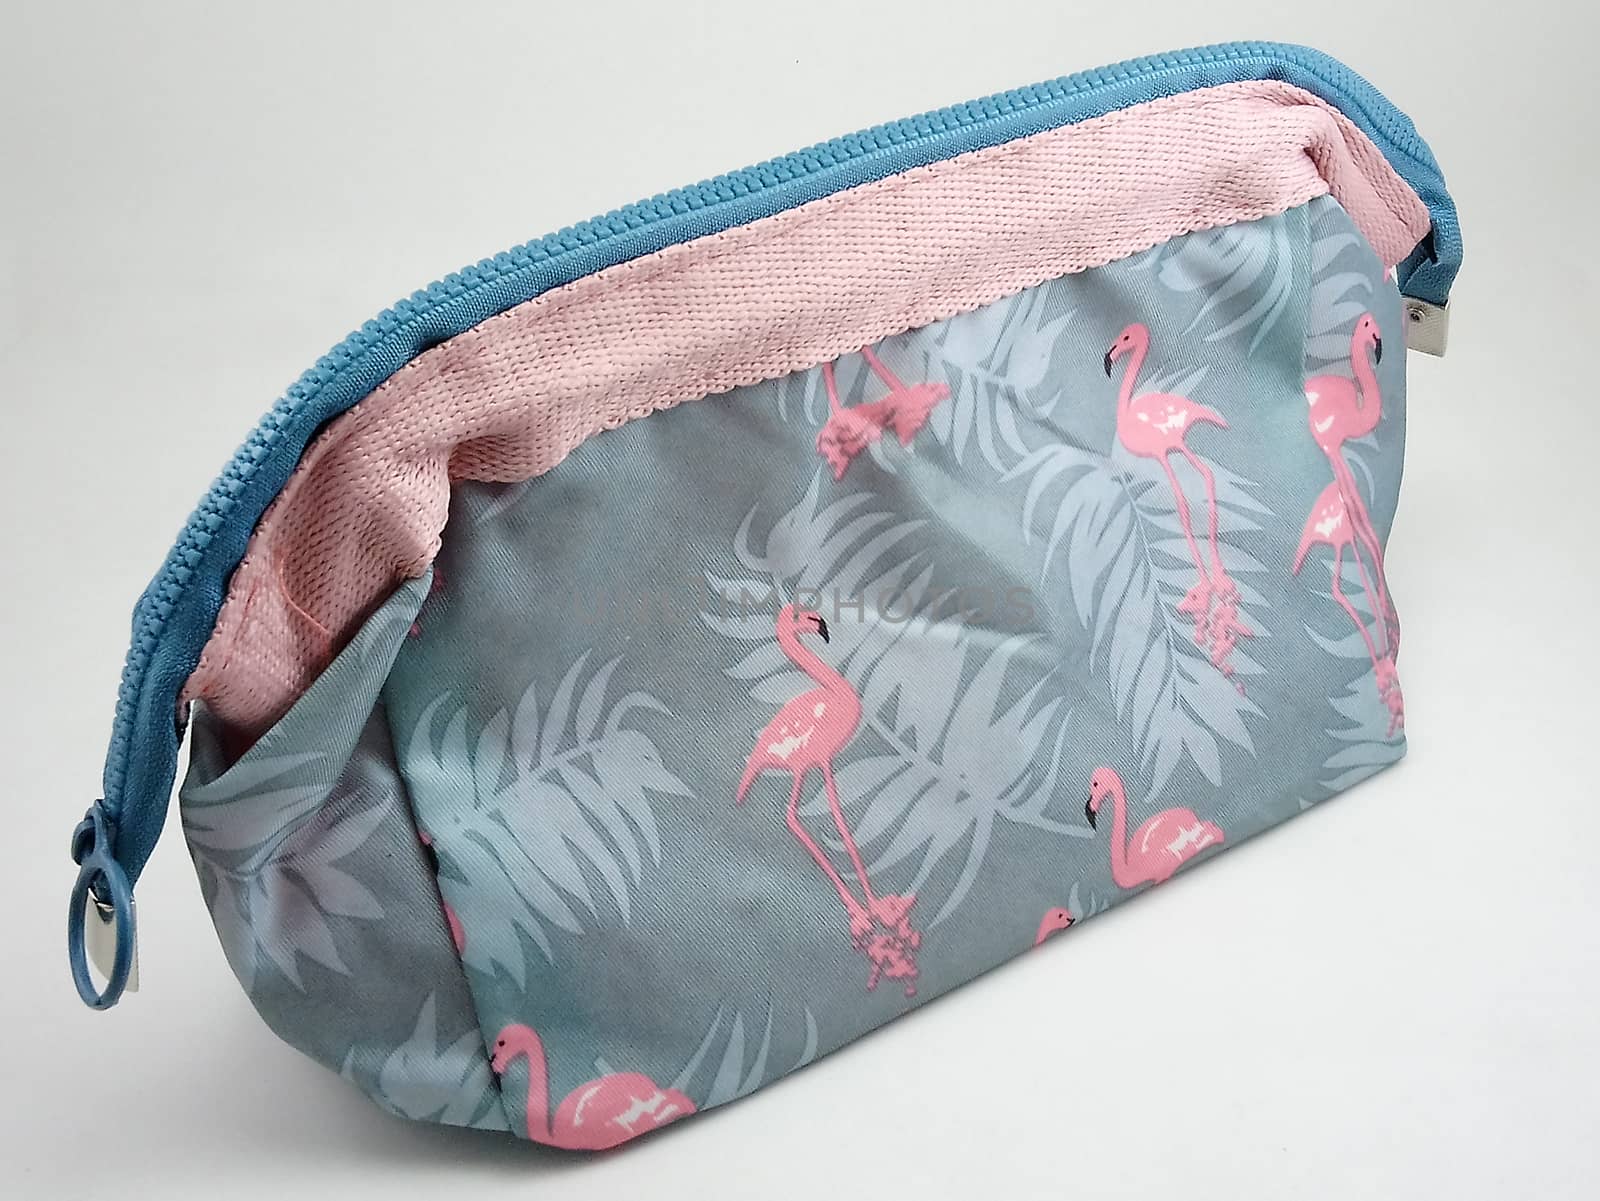 Flamingo pouch with zipper lock in Manila, Philippines by imwaltersy